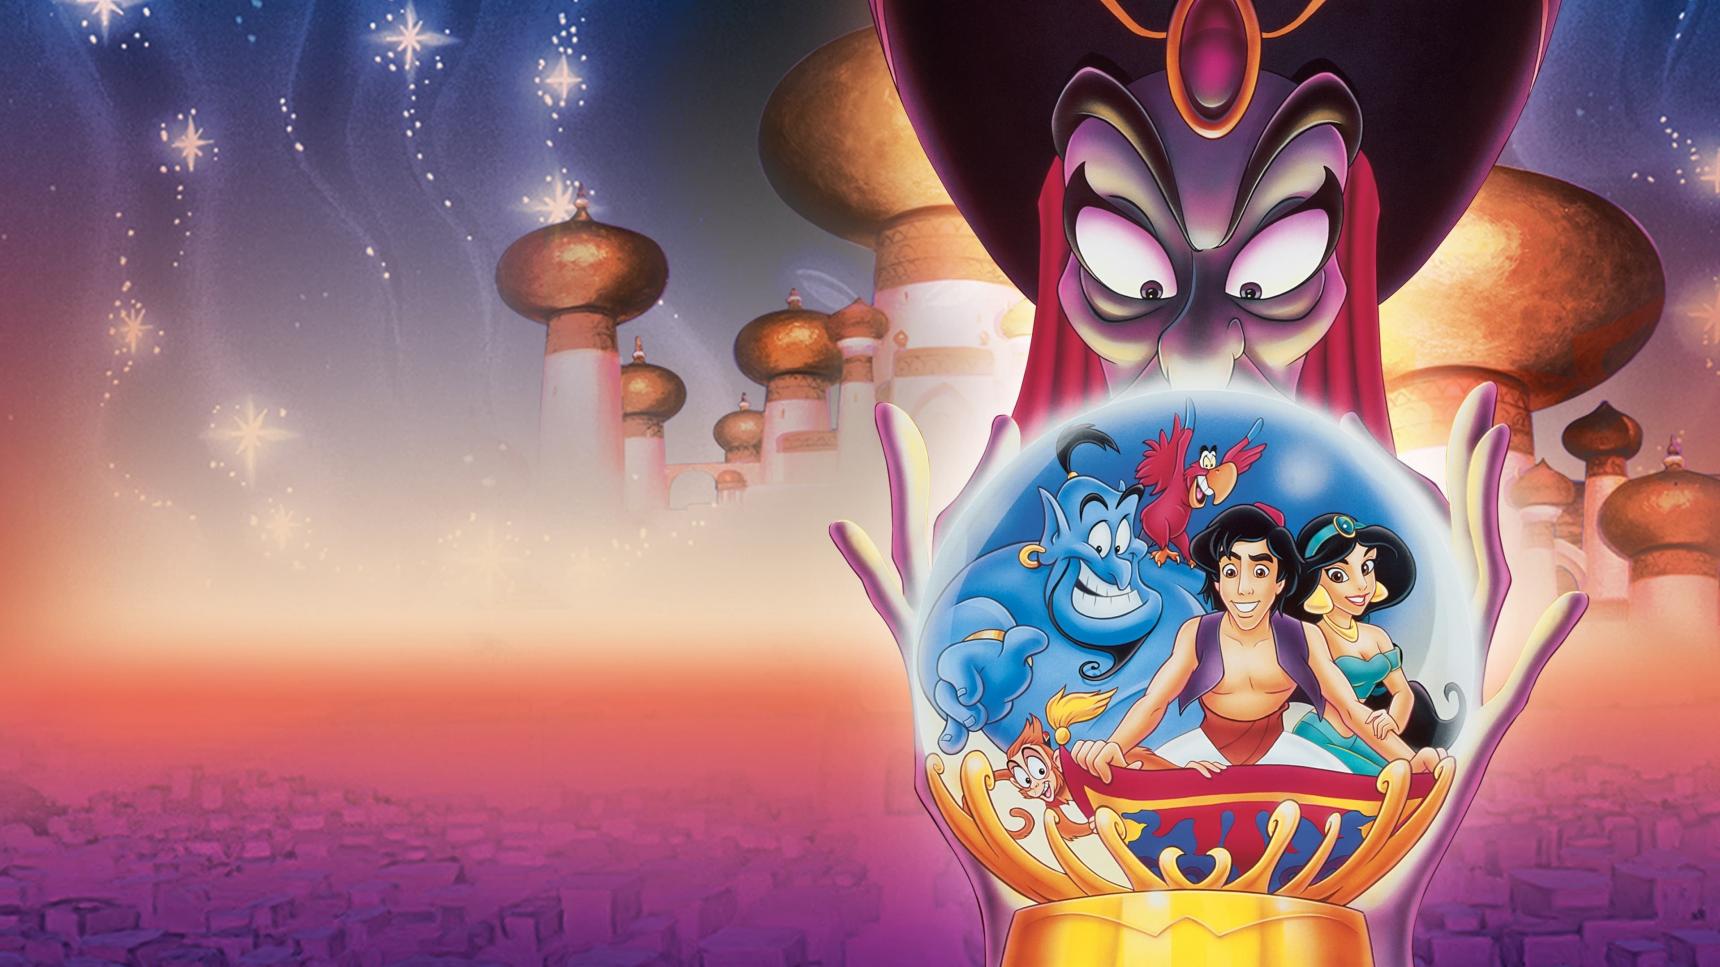 trailer Aladdin 2: El retorno de Jafar